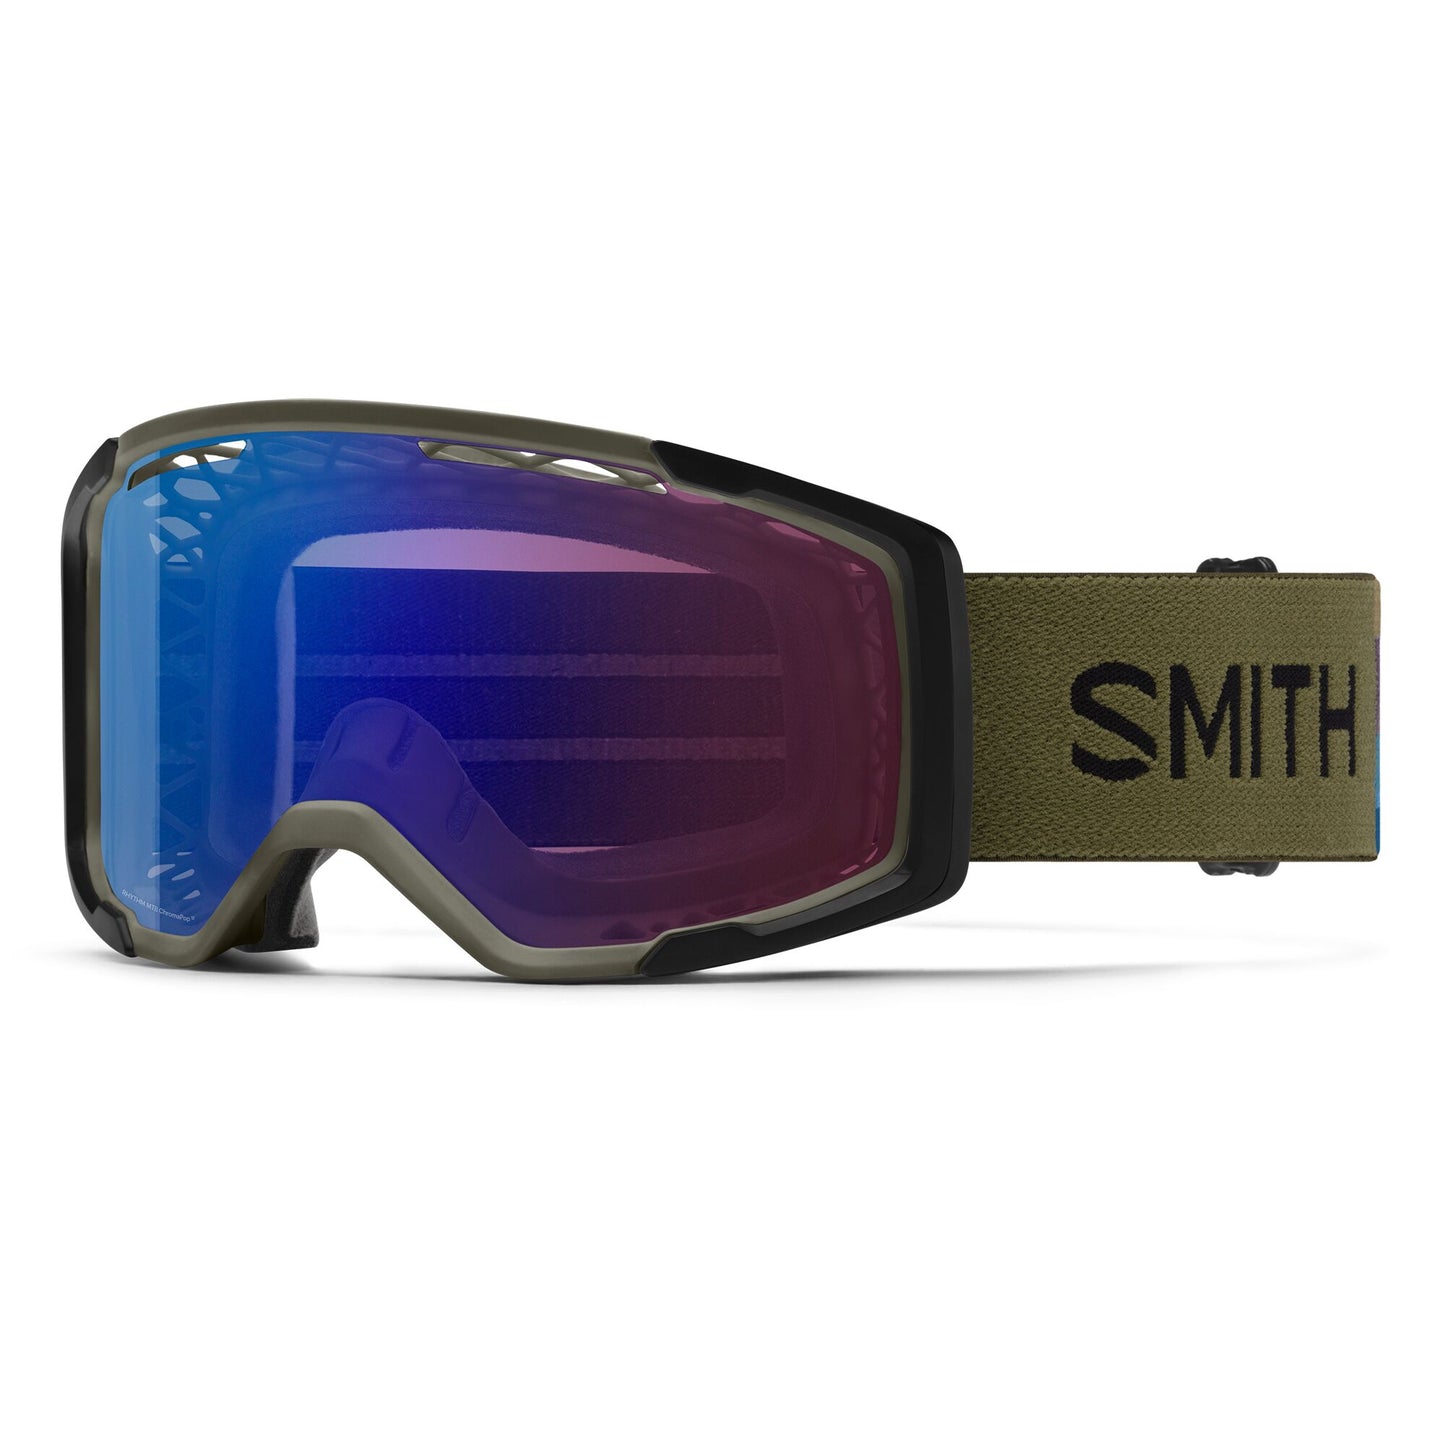 Smith Rhythm Goggles - One Size Fits Most - Trail Camo - ChromaPop Contrast Rose Flash